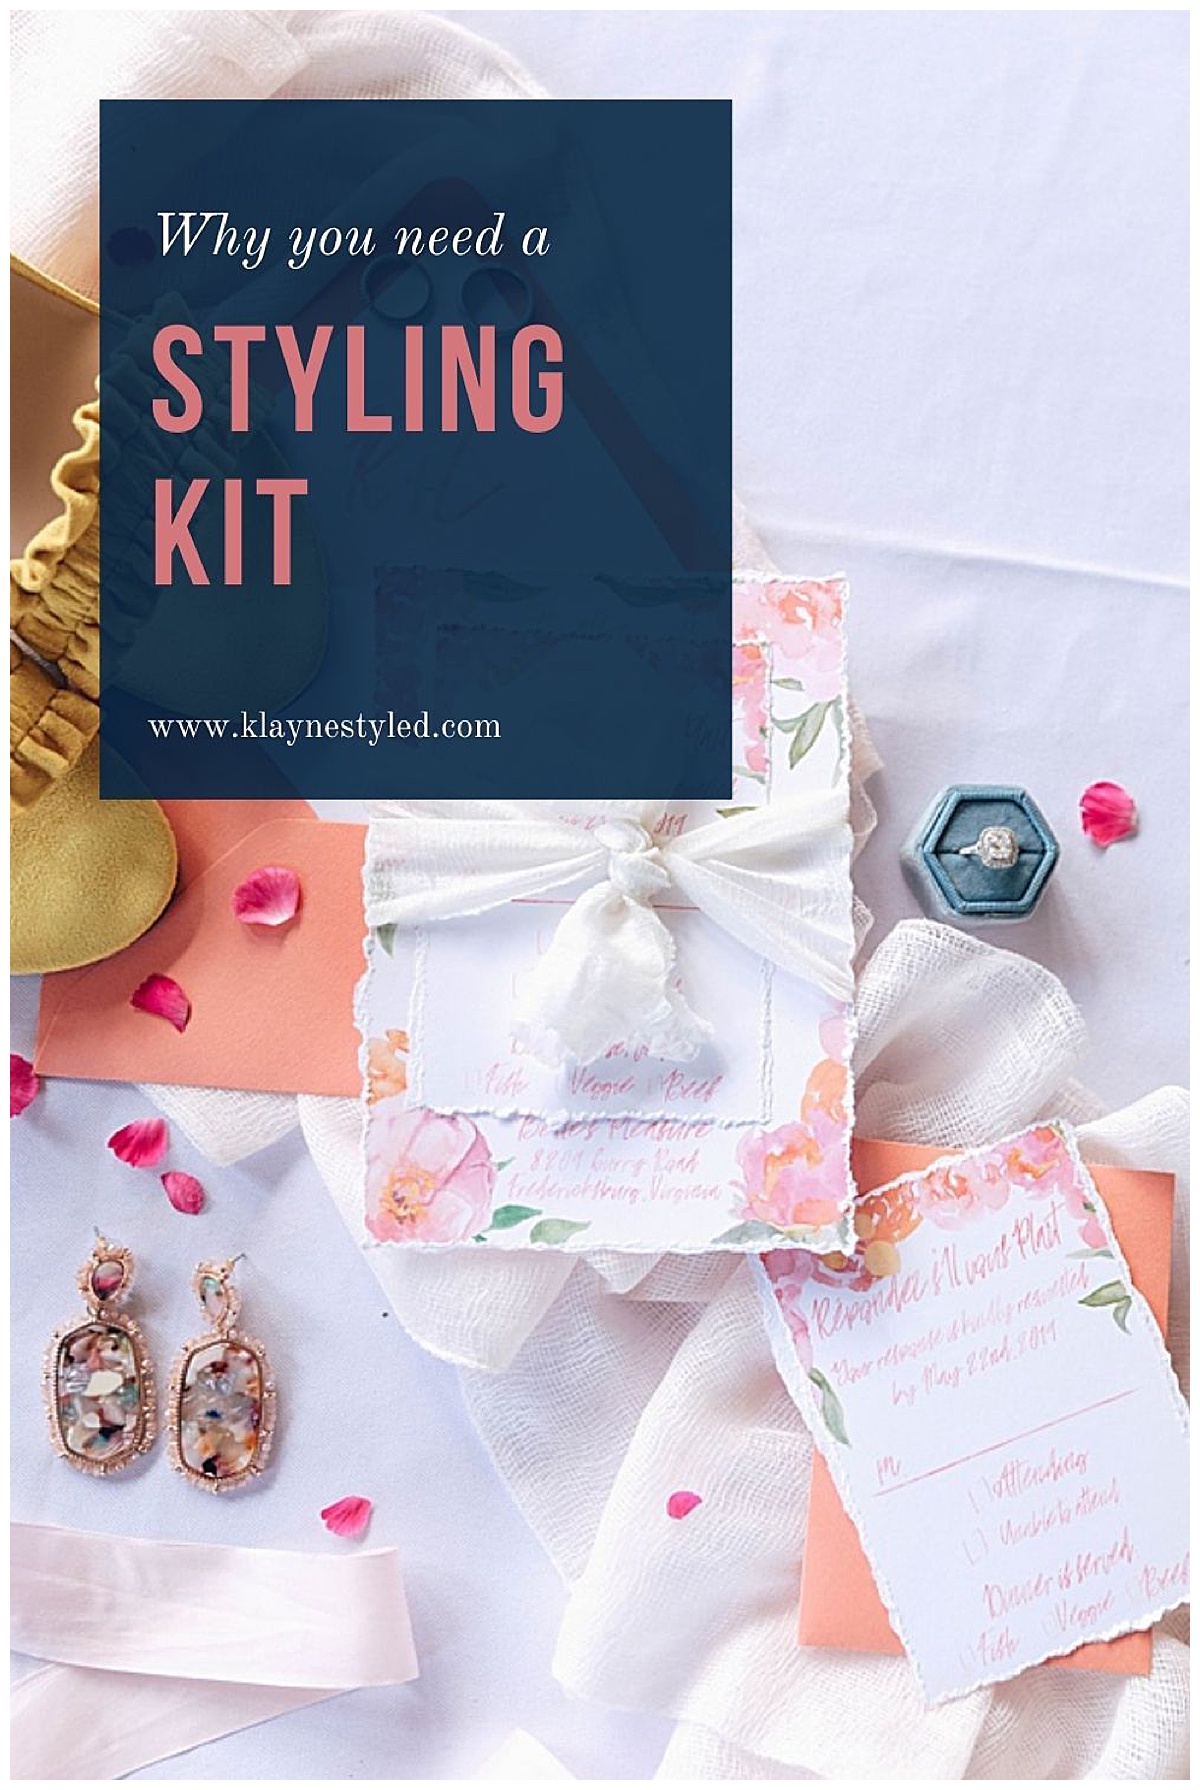 styling kit flat lay pinterest image